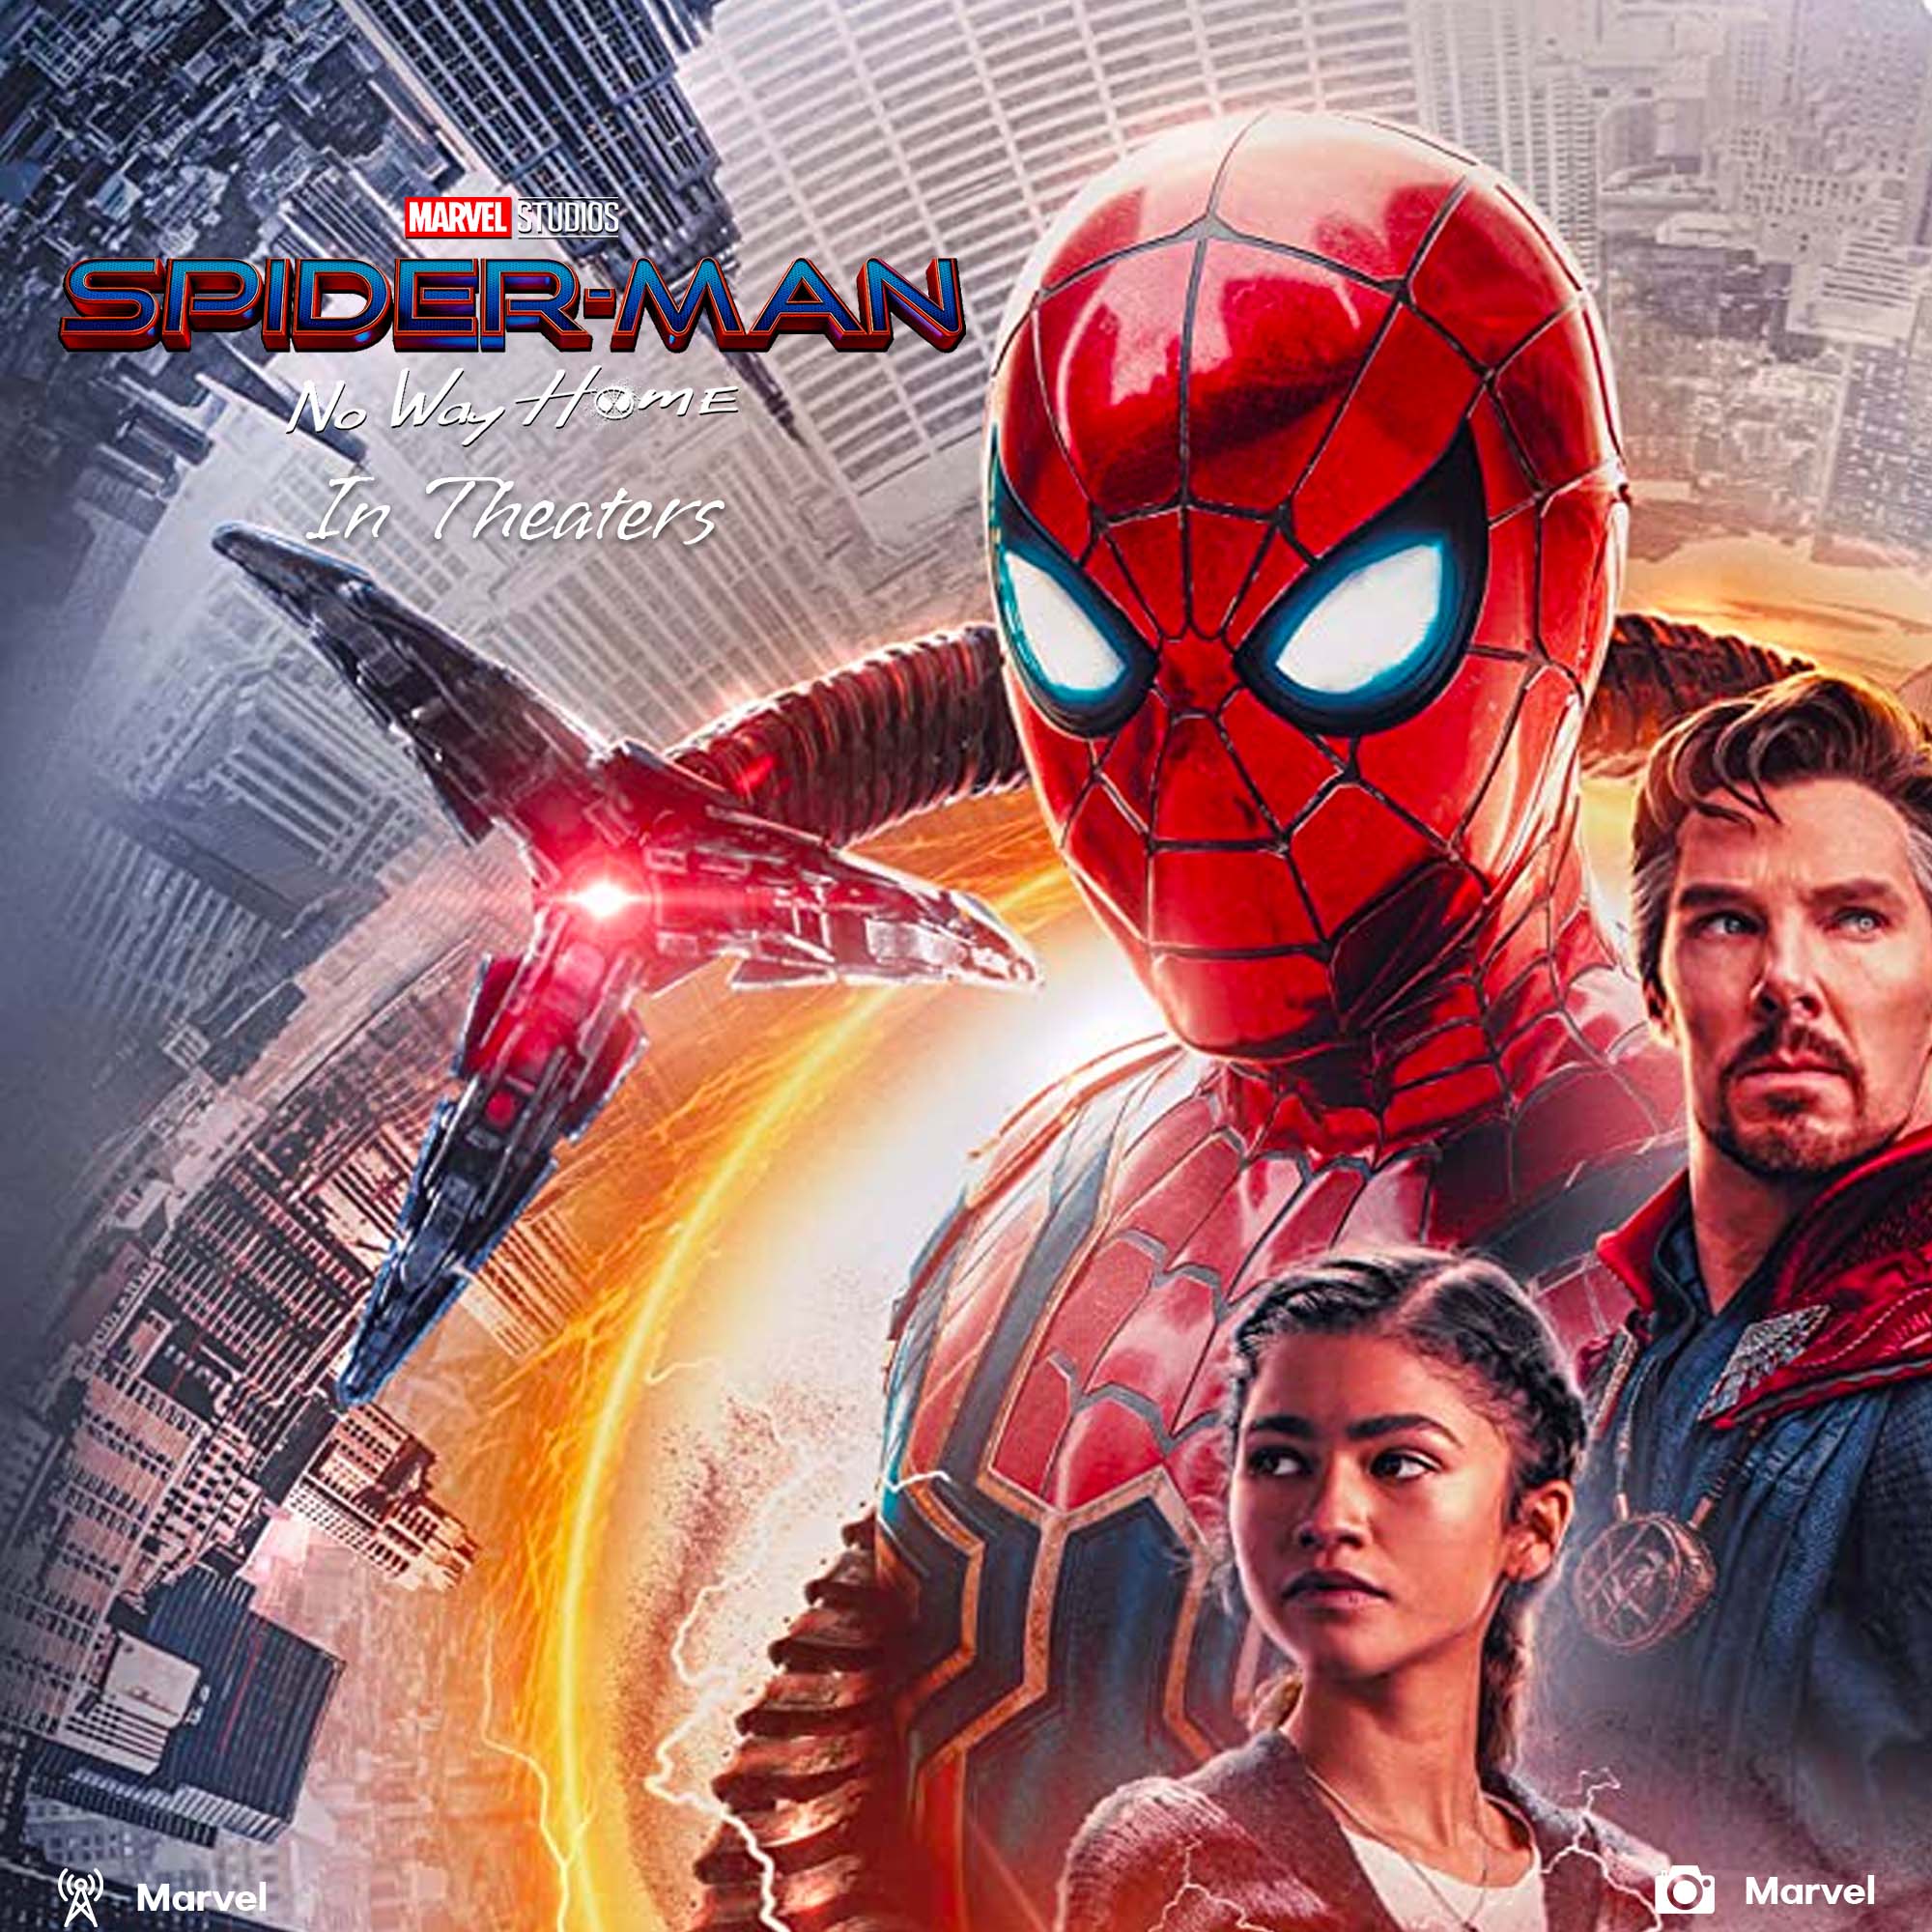 Spider-Man No Way Home is in cinemas